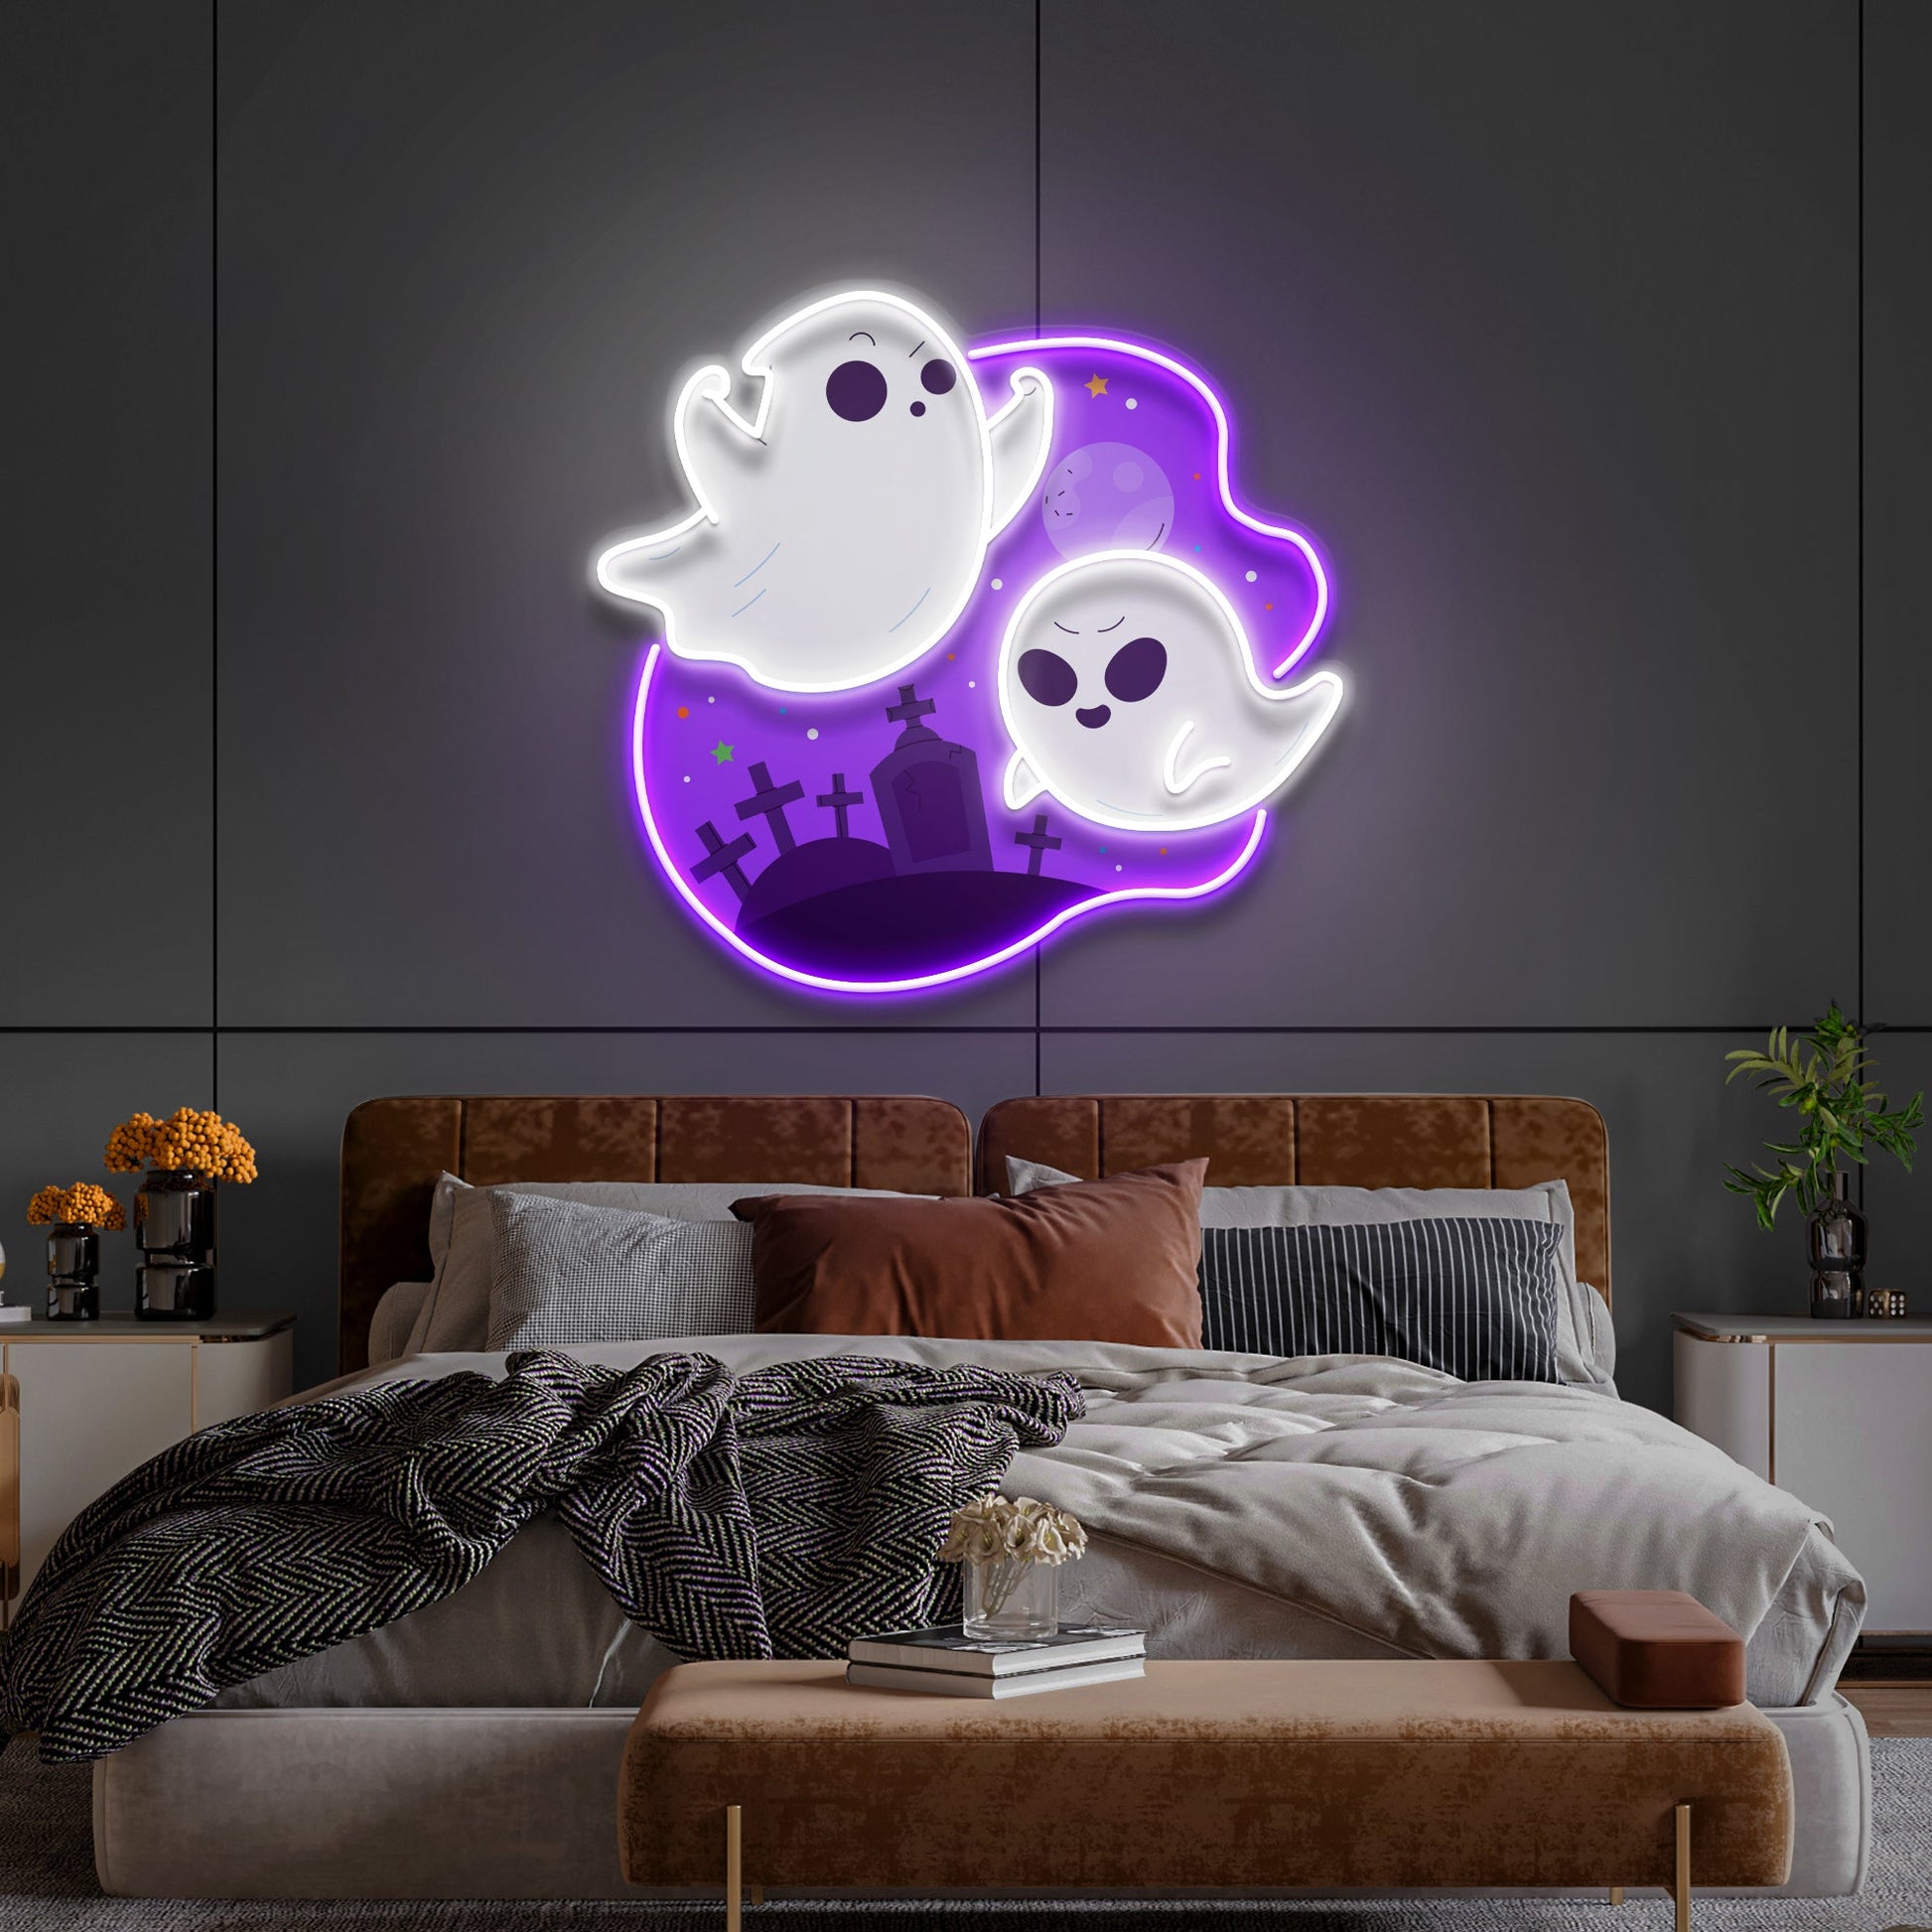 Cute Ghost Halloween Day Artwork Led Neon Sign Light - Neonzastudio